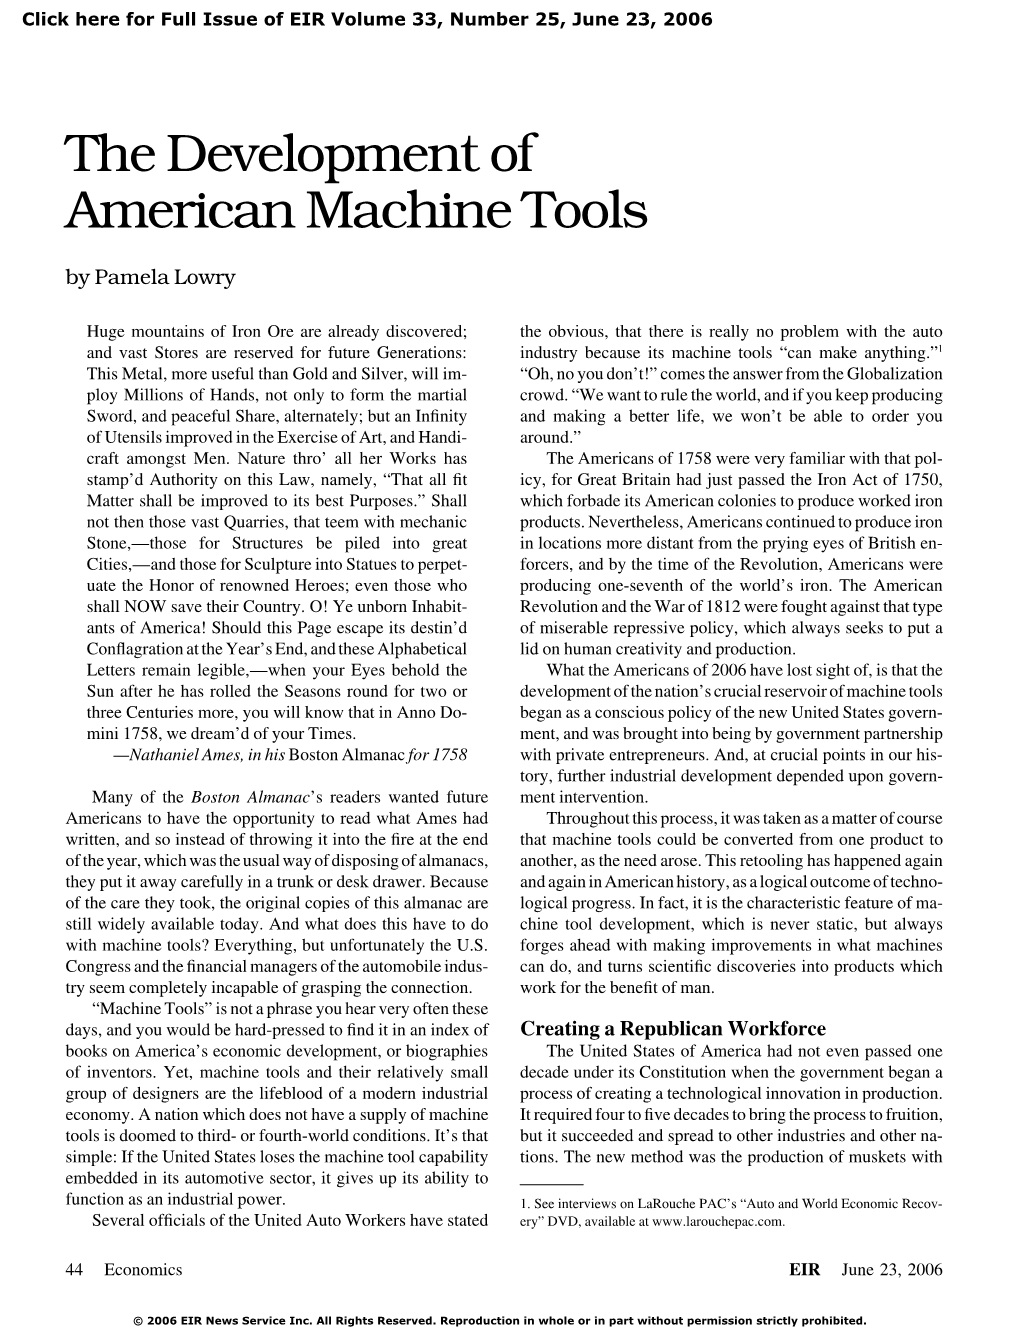 The Development of American Machine Tools